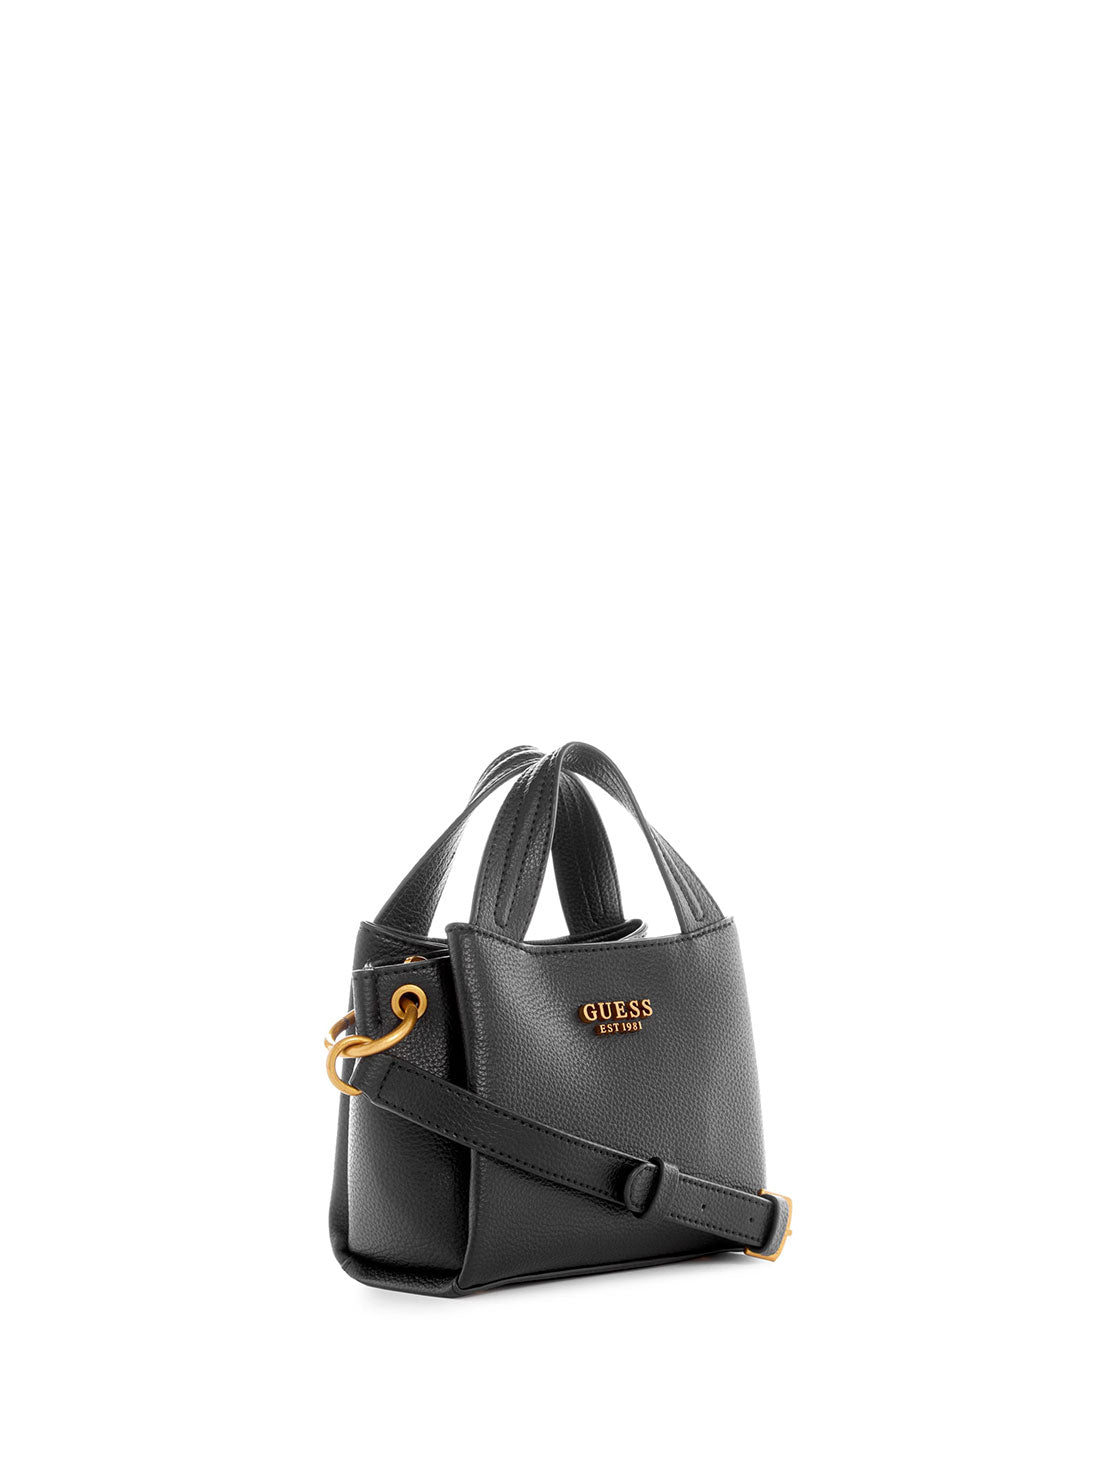 GUESS Women's Black Zed Mini Girlfriend Crossbody Bag VB868376 Front Side View